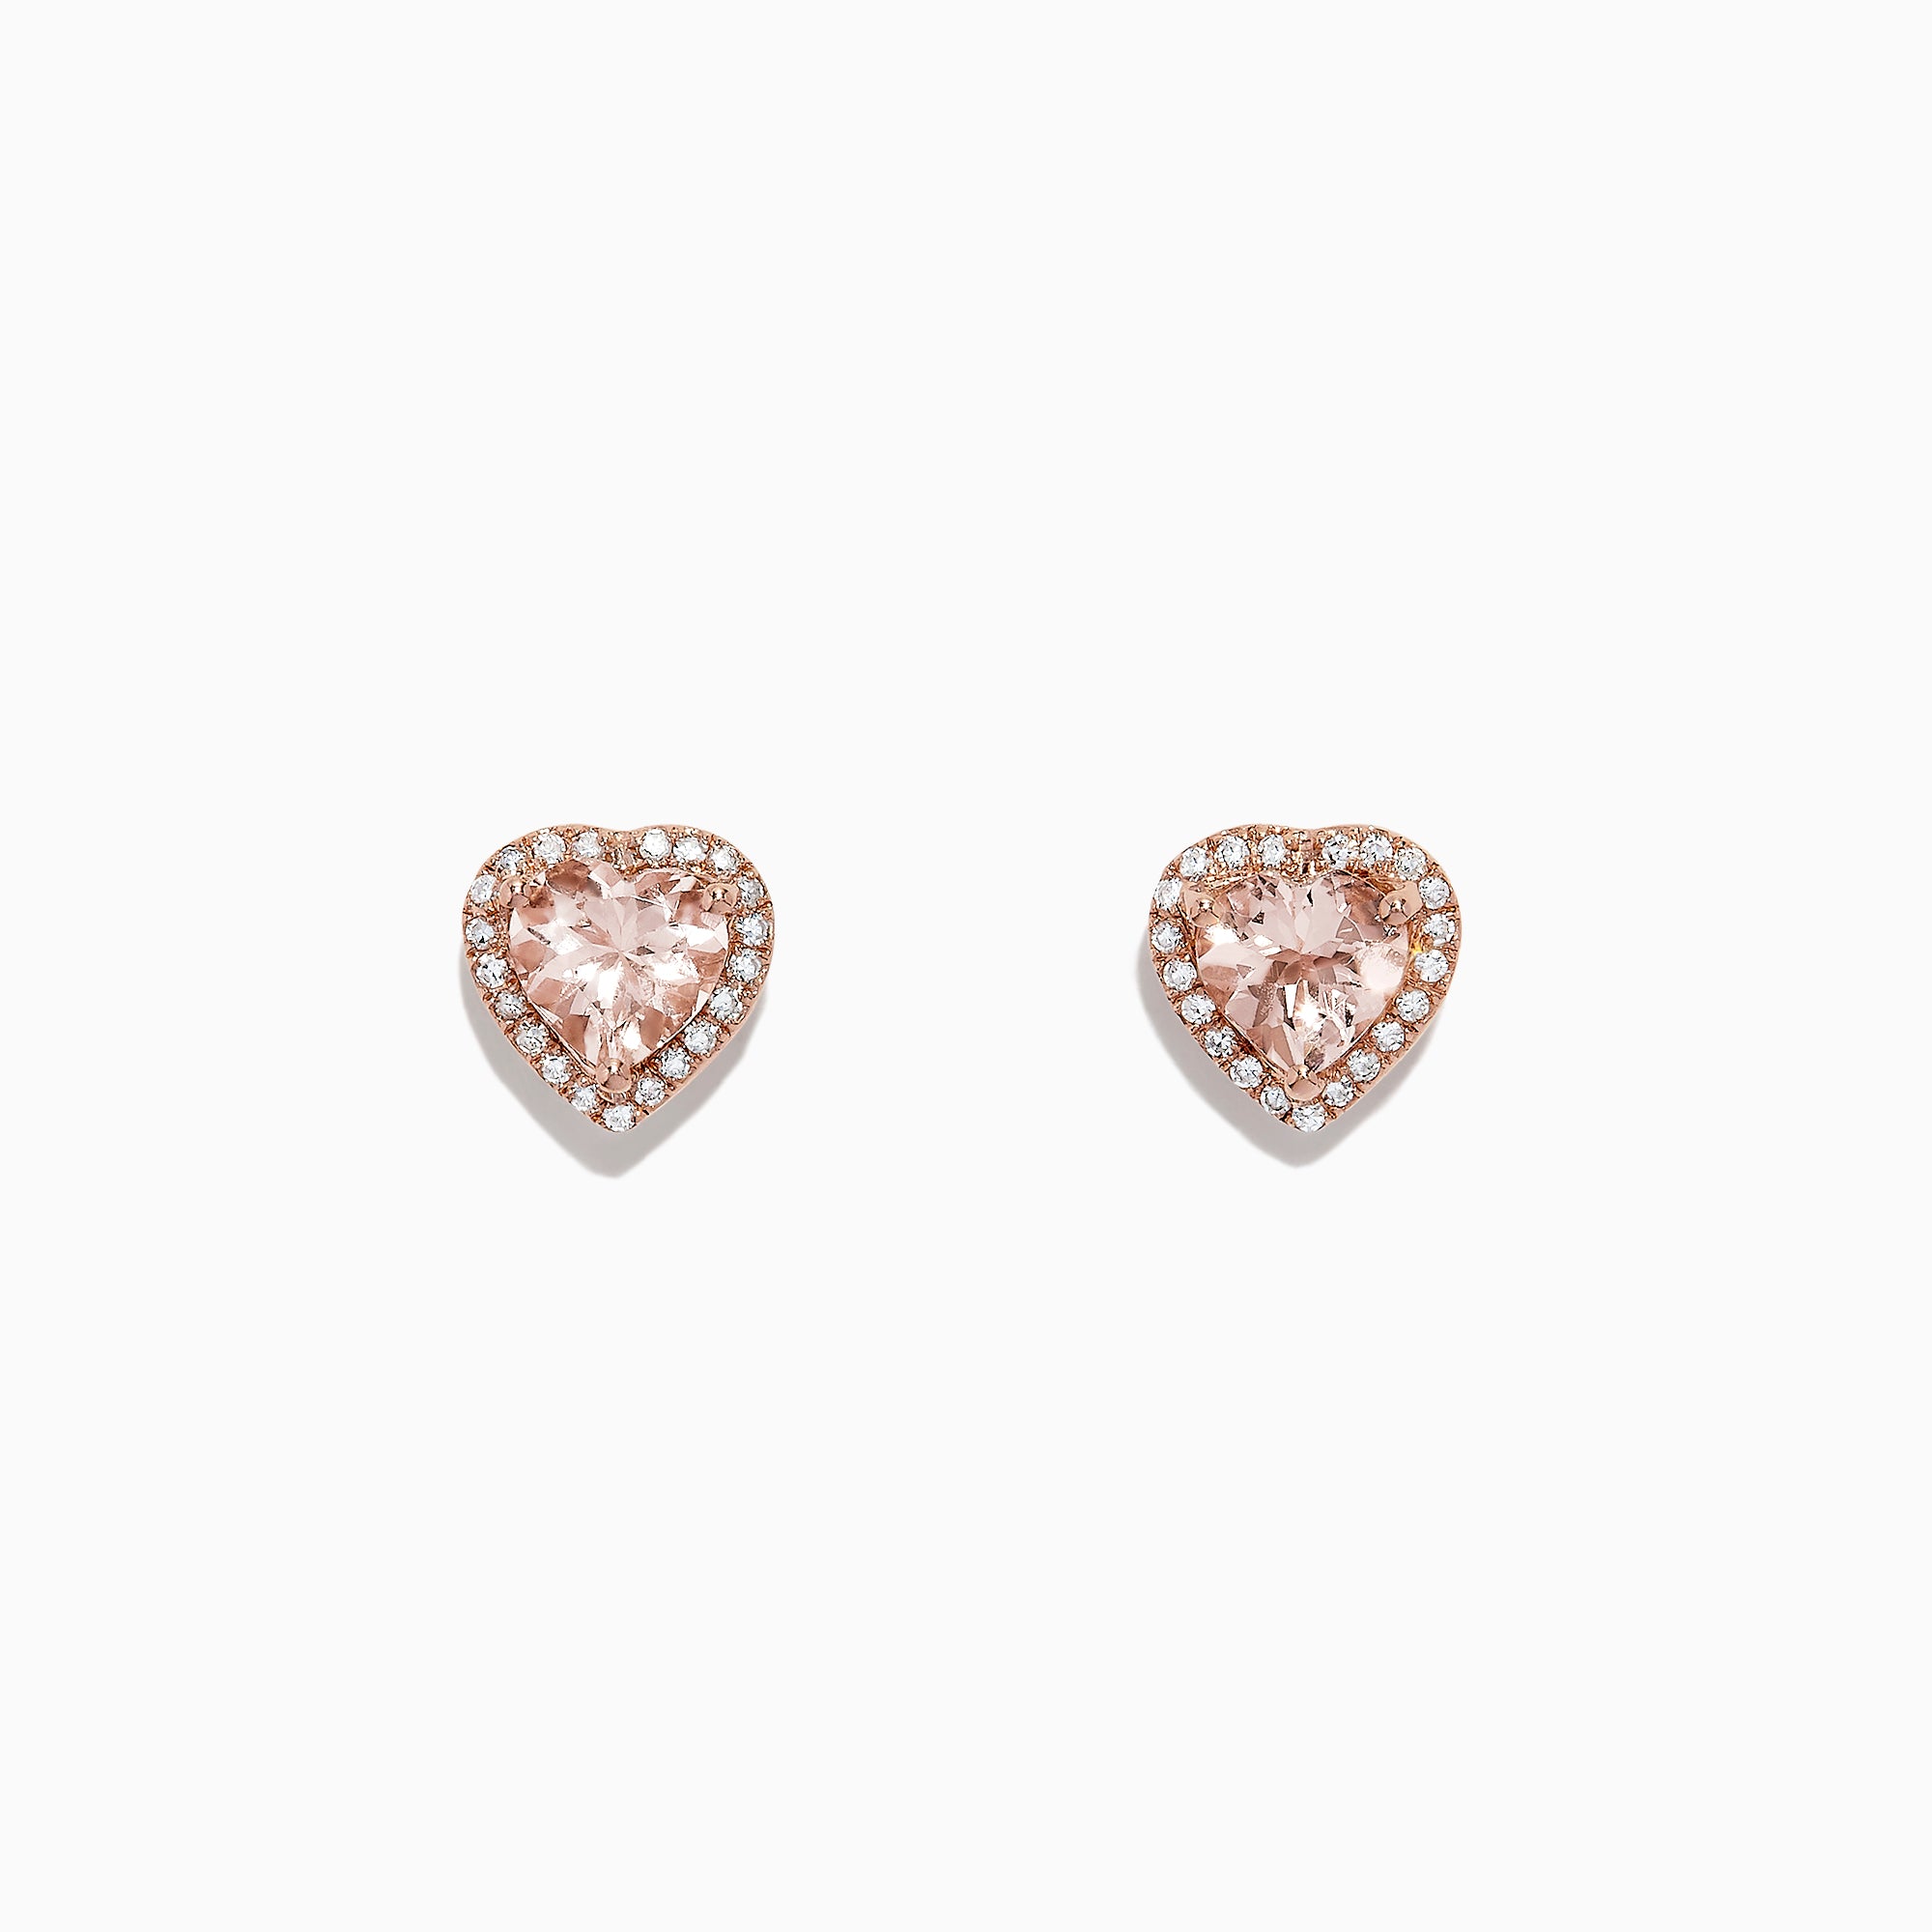 Morganite and Diamond 14kt Rose Gold Earrings